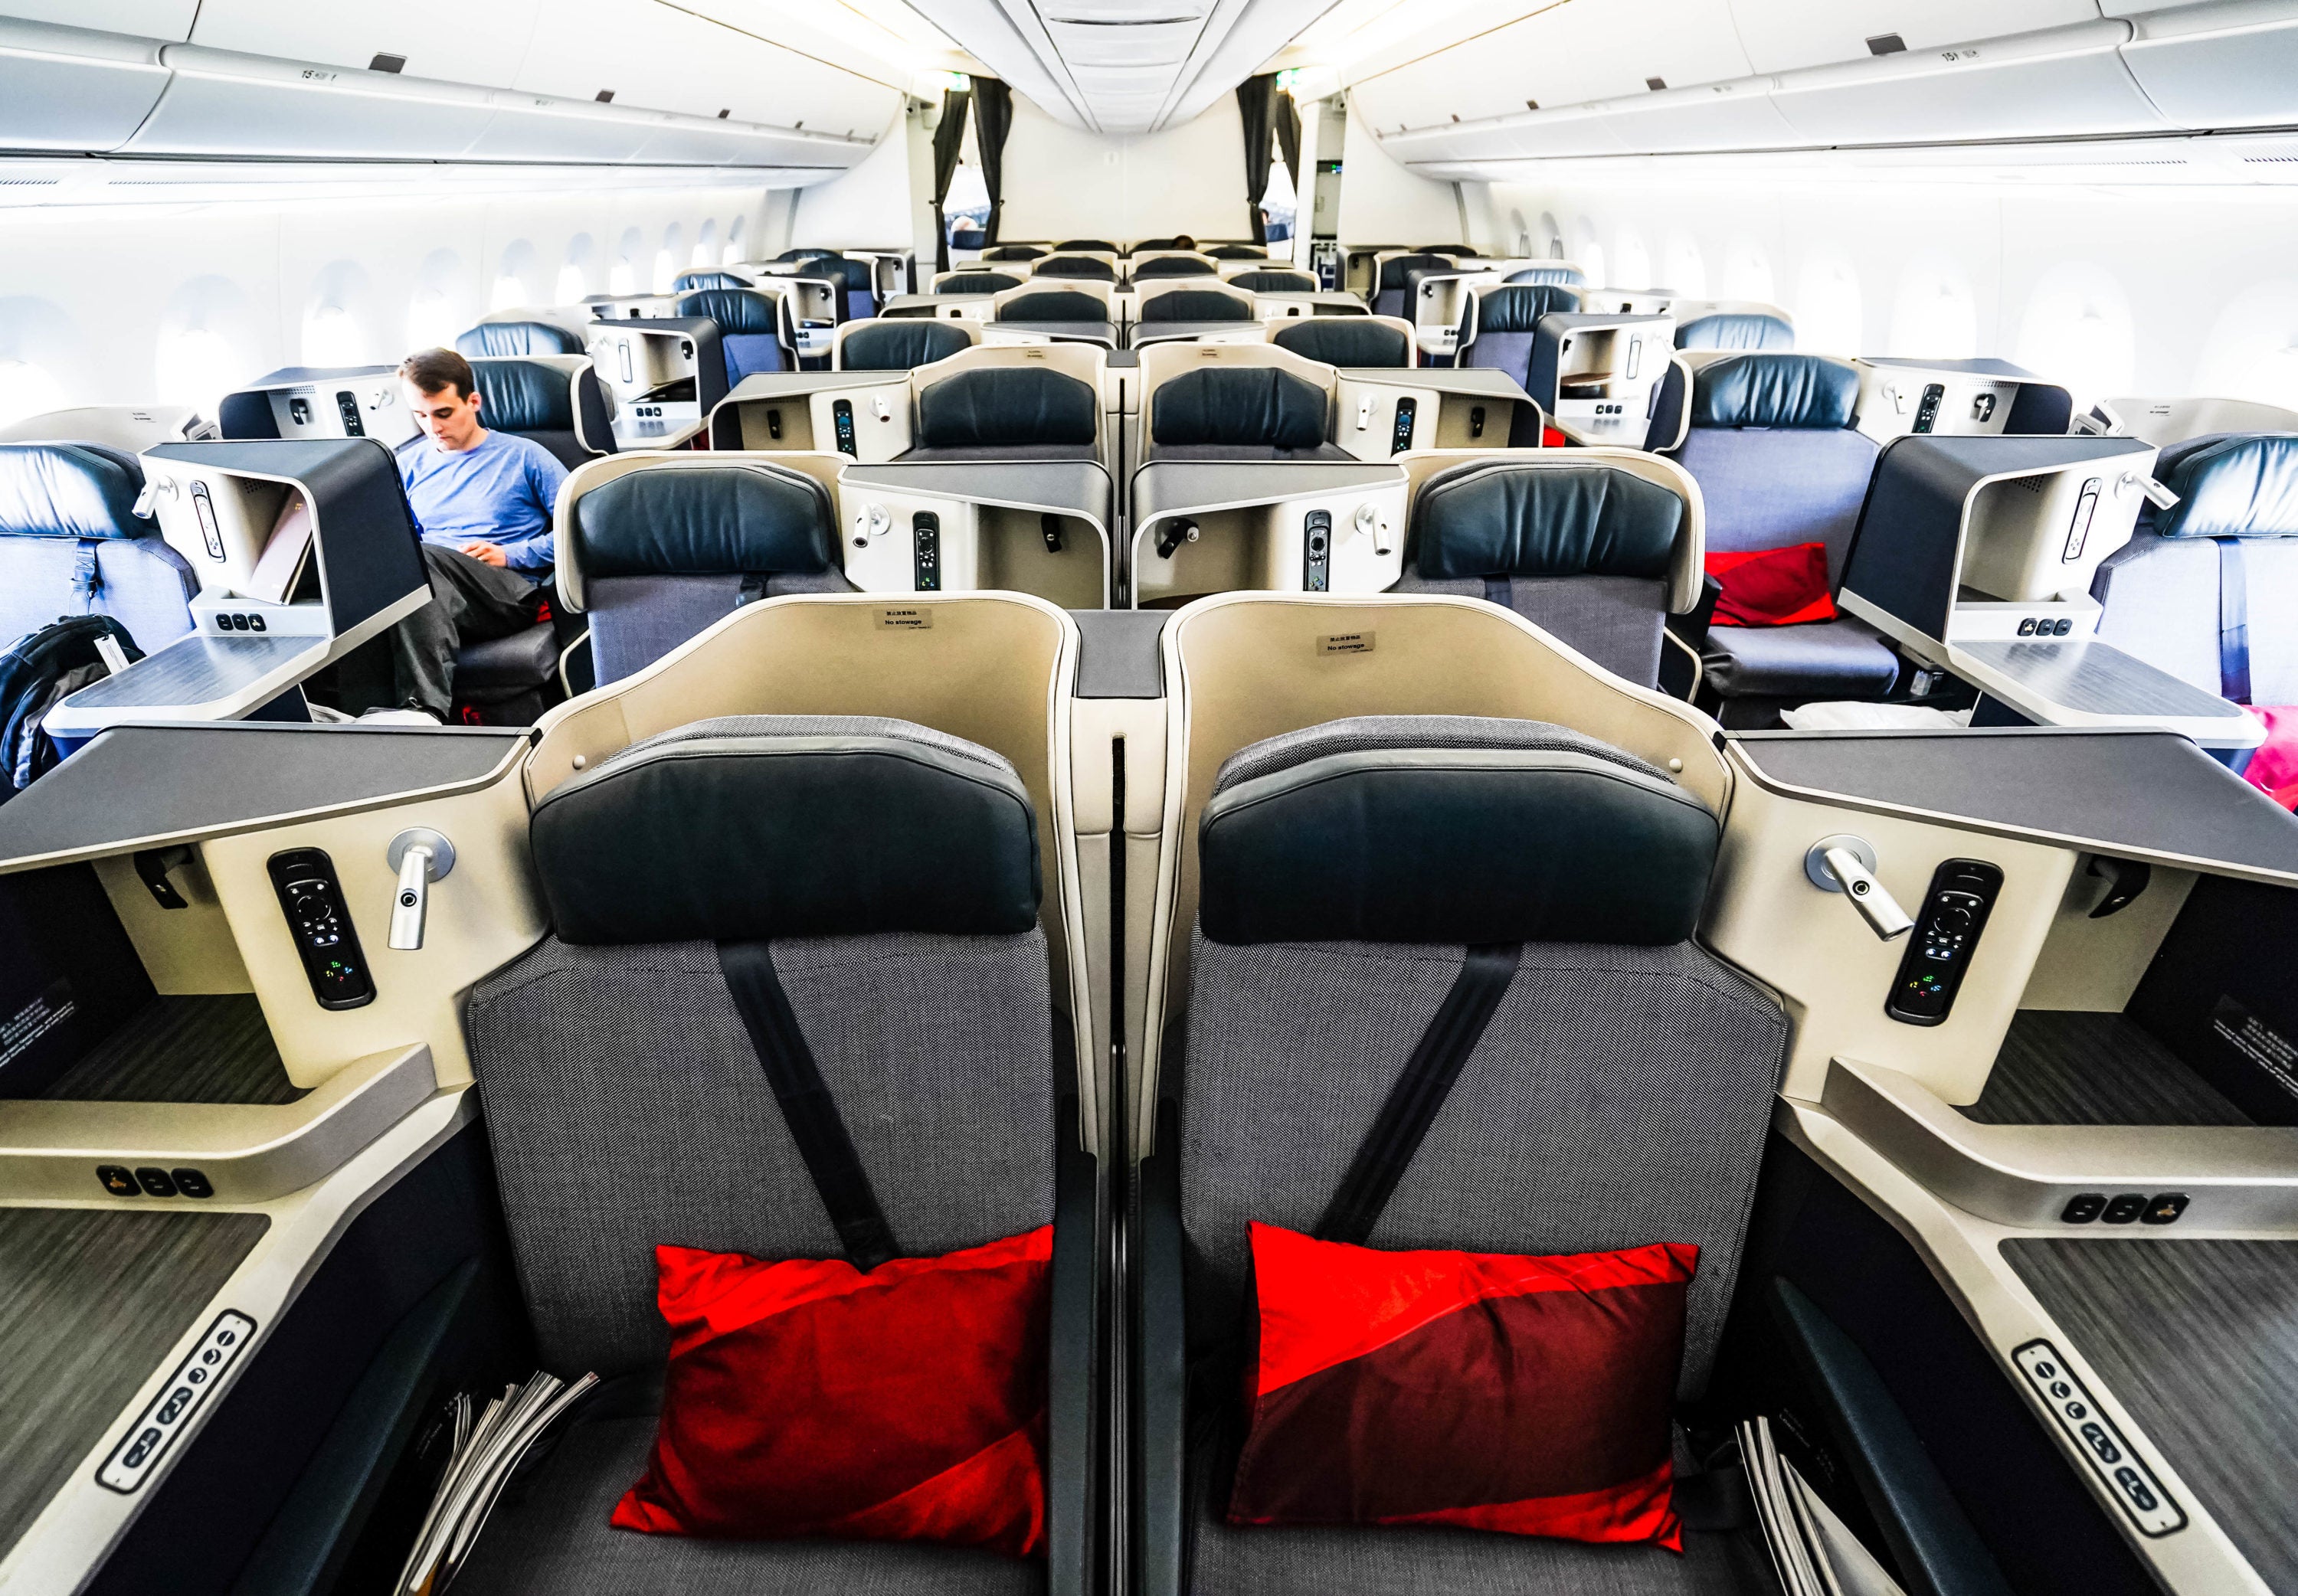 Hainan Airlines A350 Business Class Cabin - Cherag Dubash